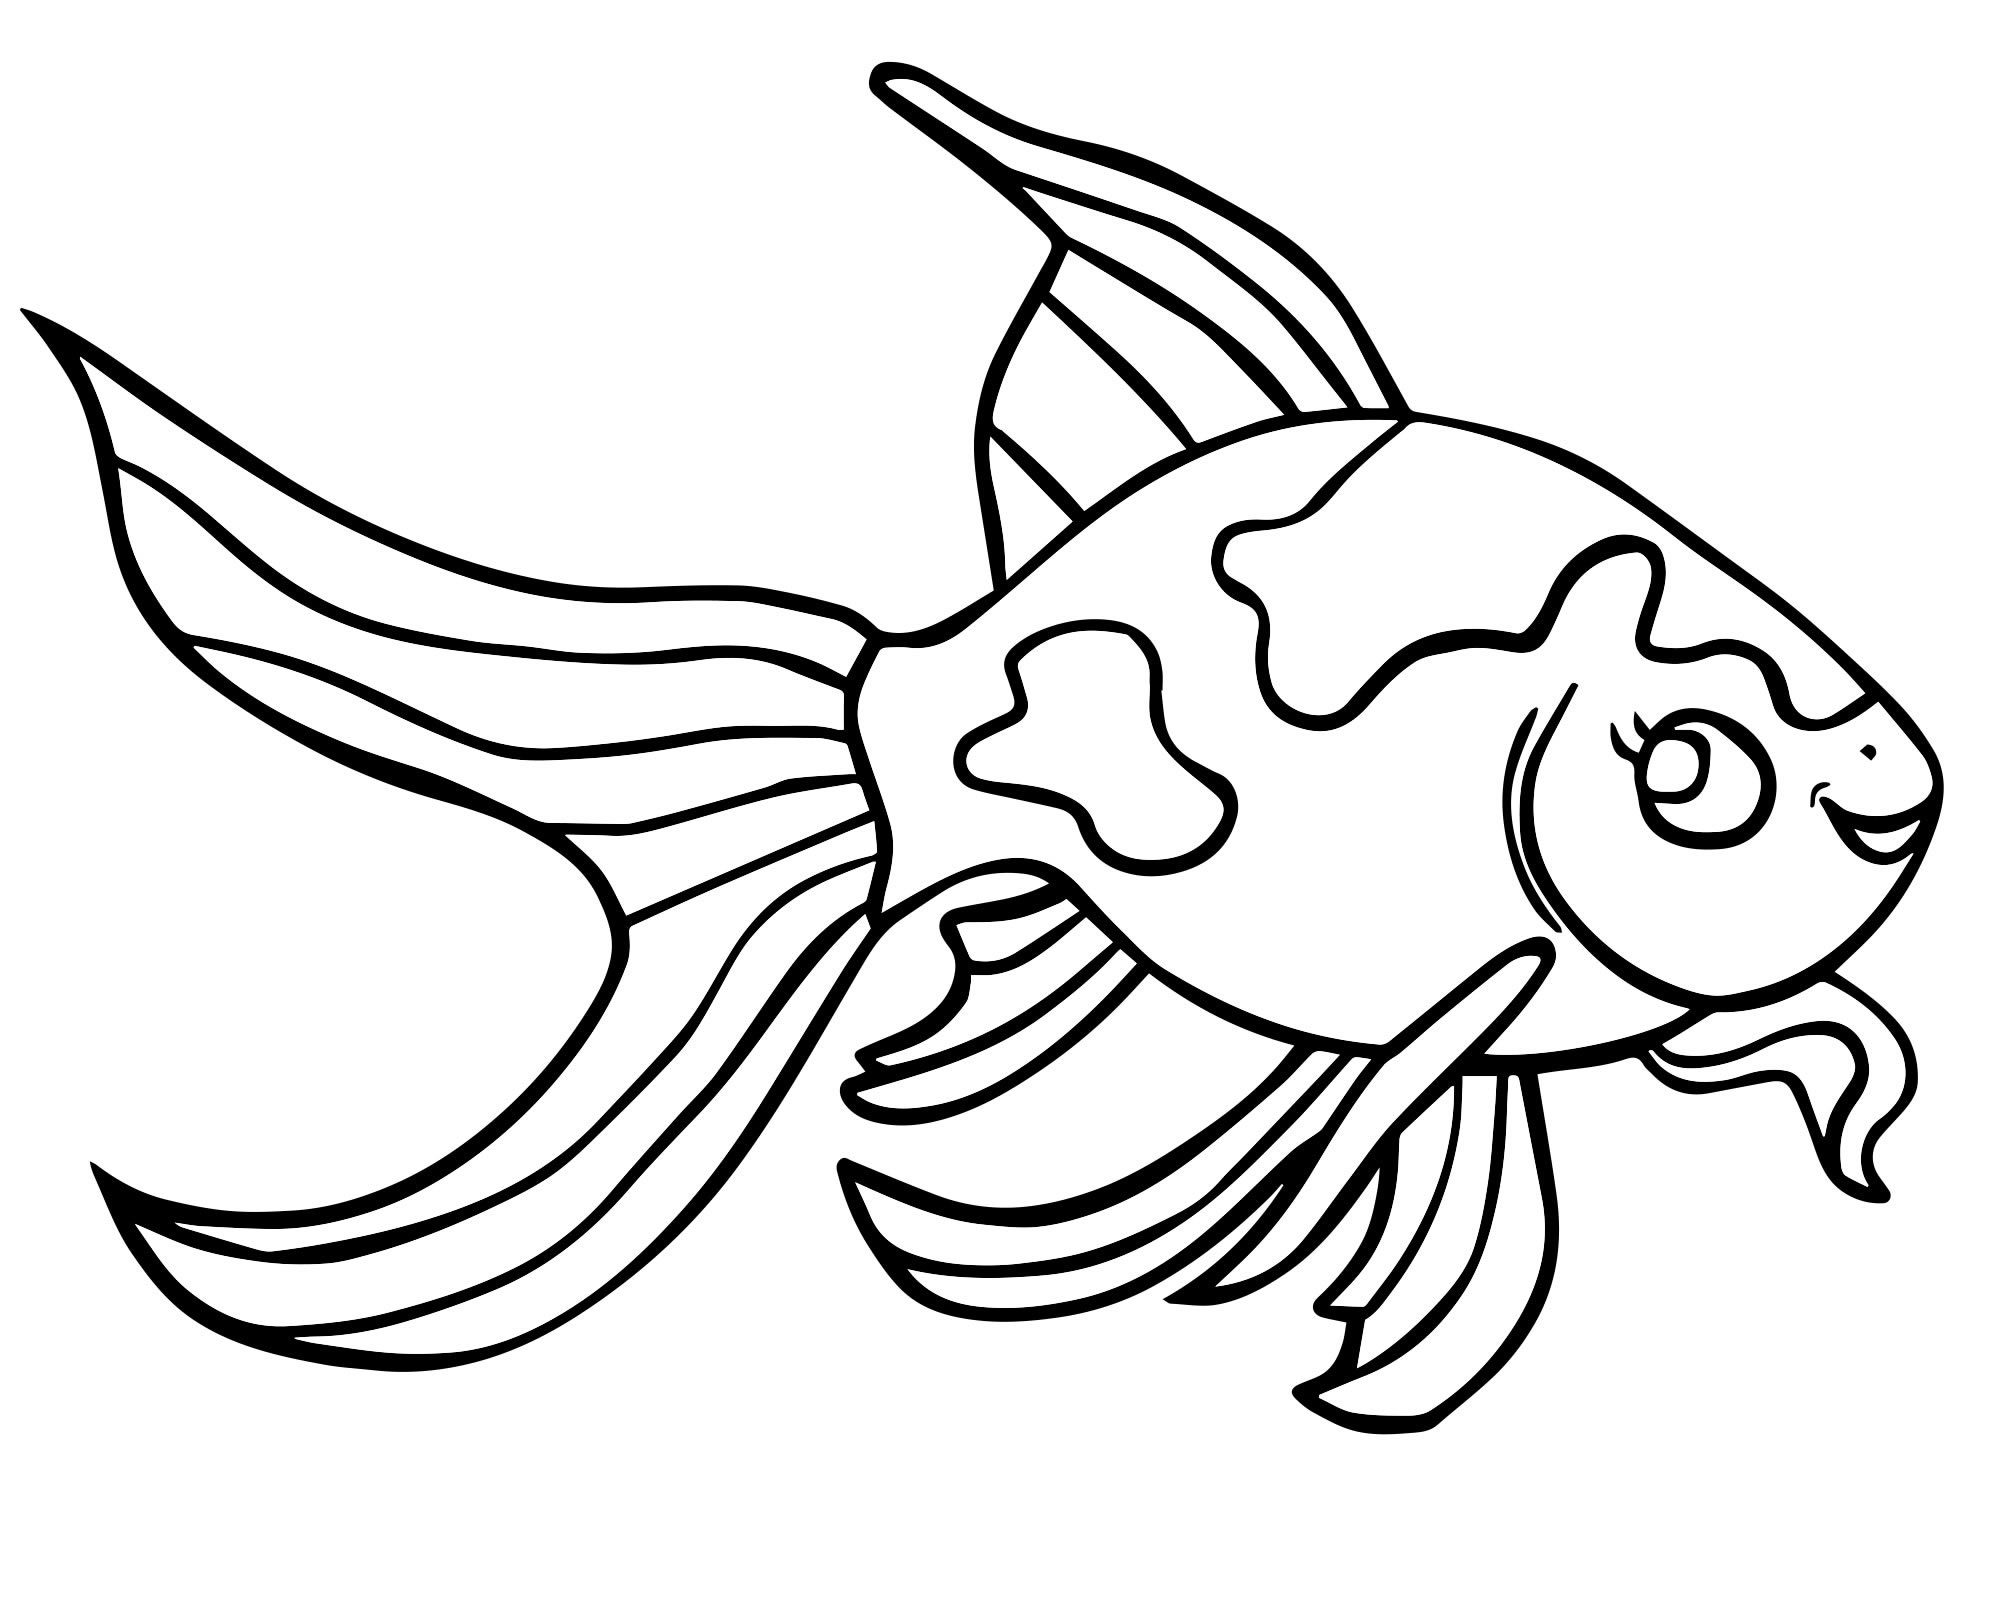 Раскраски рыбки для детей 3 4 лет. Раскраска рыбка. Рыбка раскраска для детей. Рыба раскраска для детей. Рыбка для раскрашивания для детей.